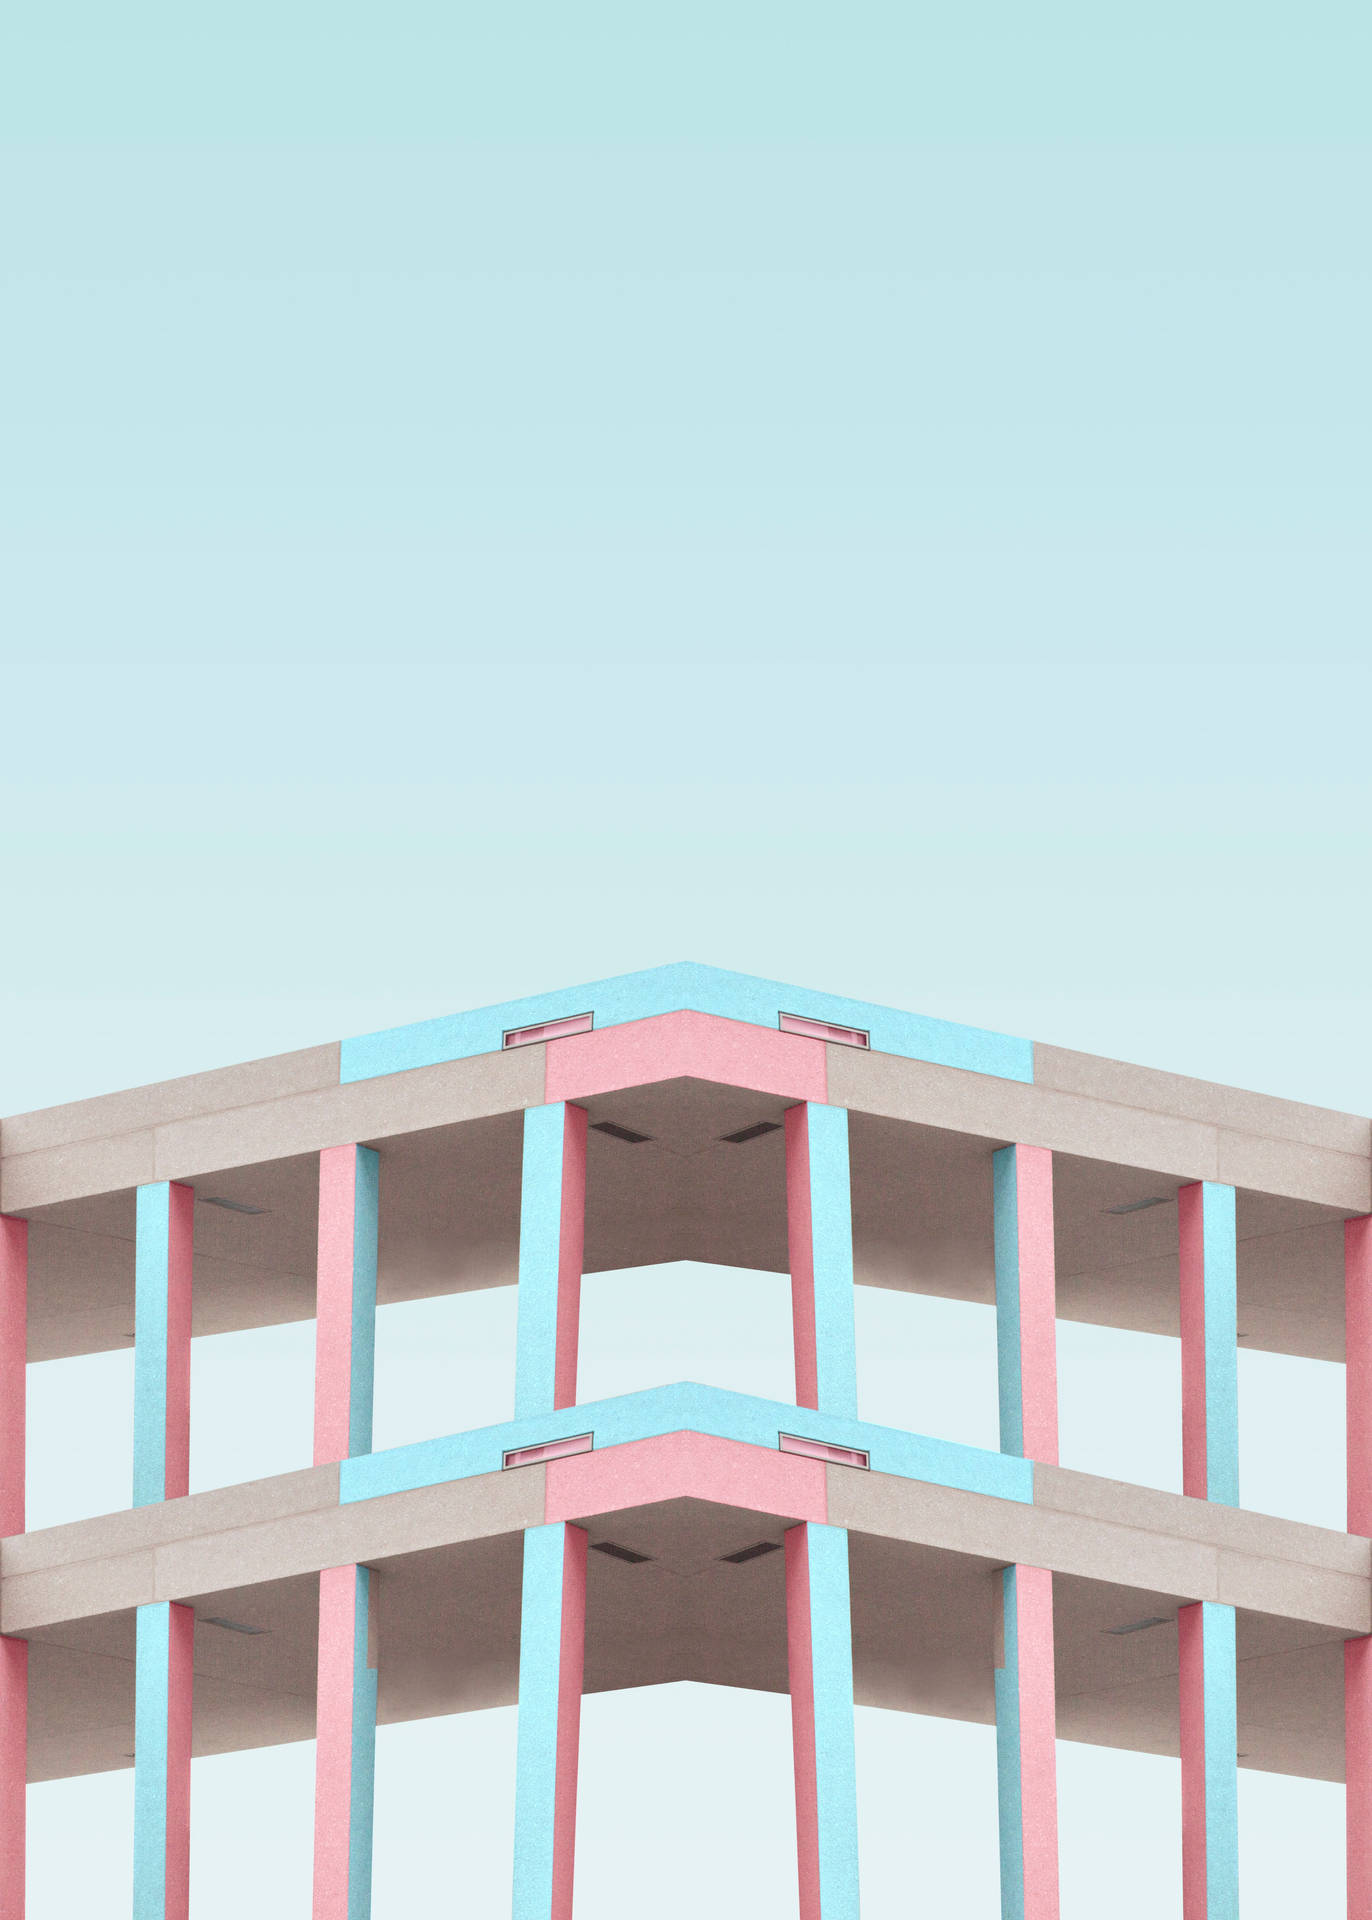 Minimal Architecture Wallpaper